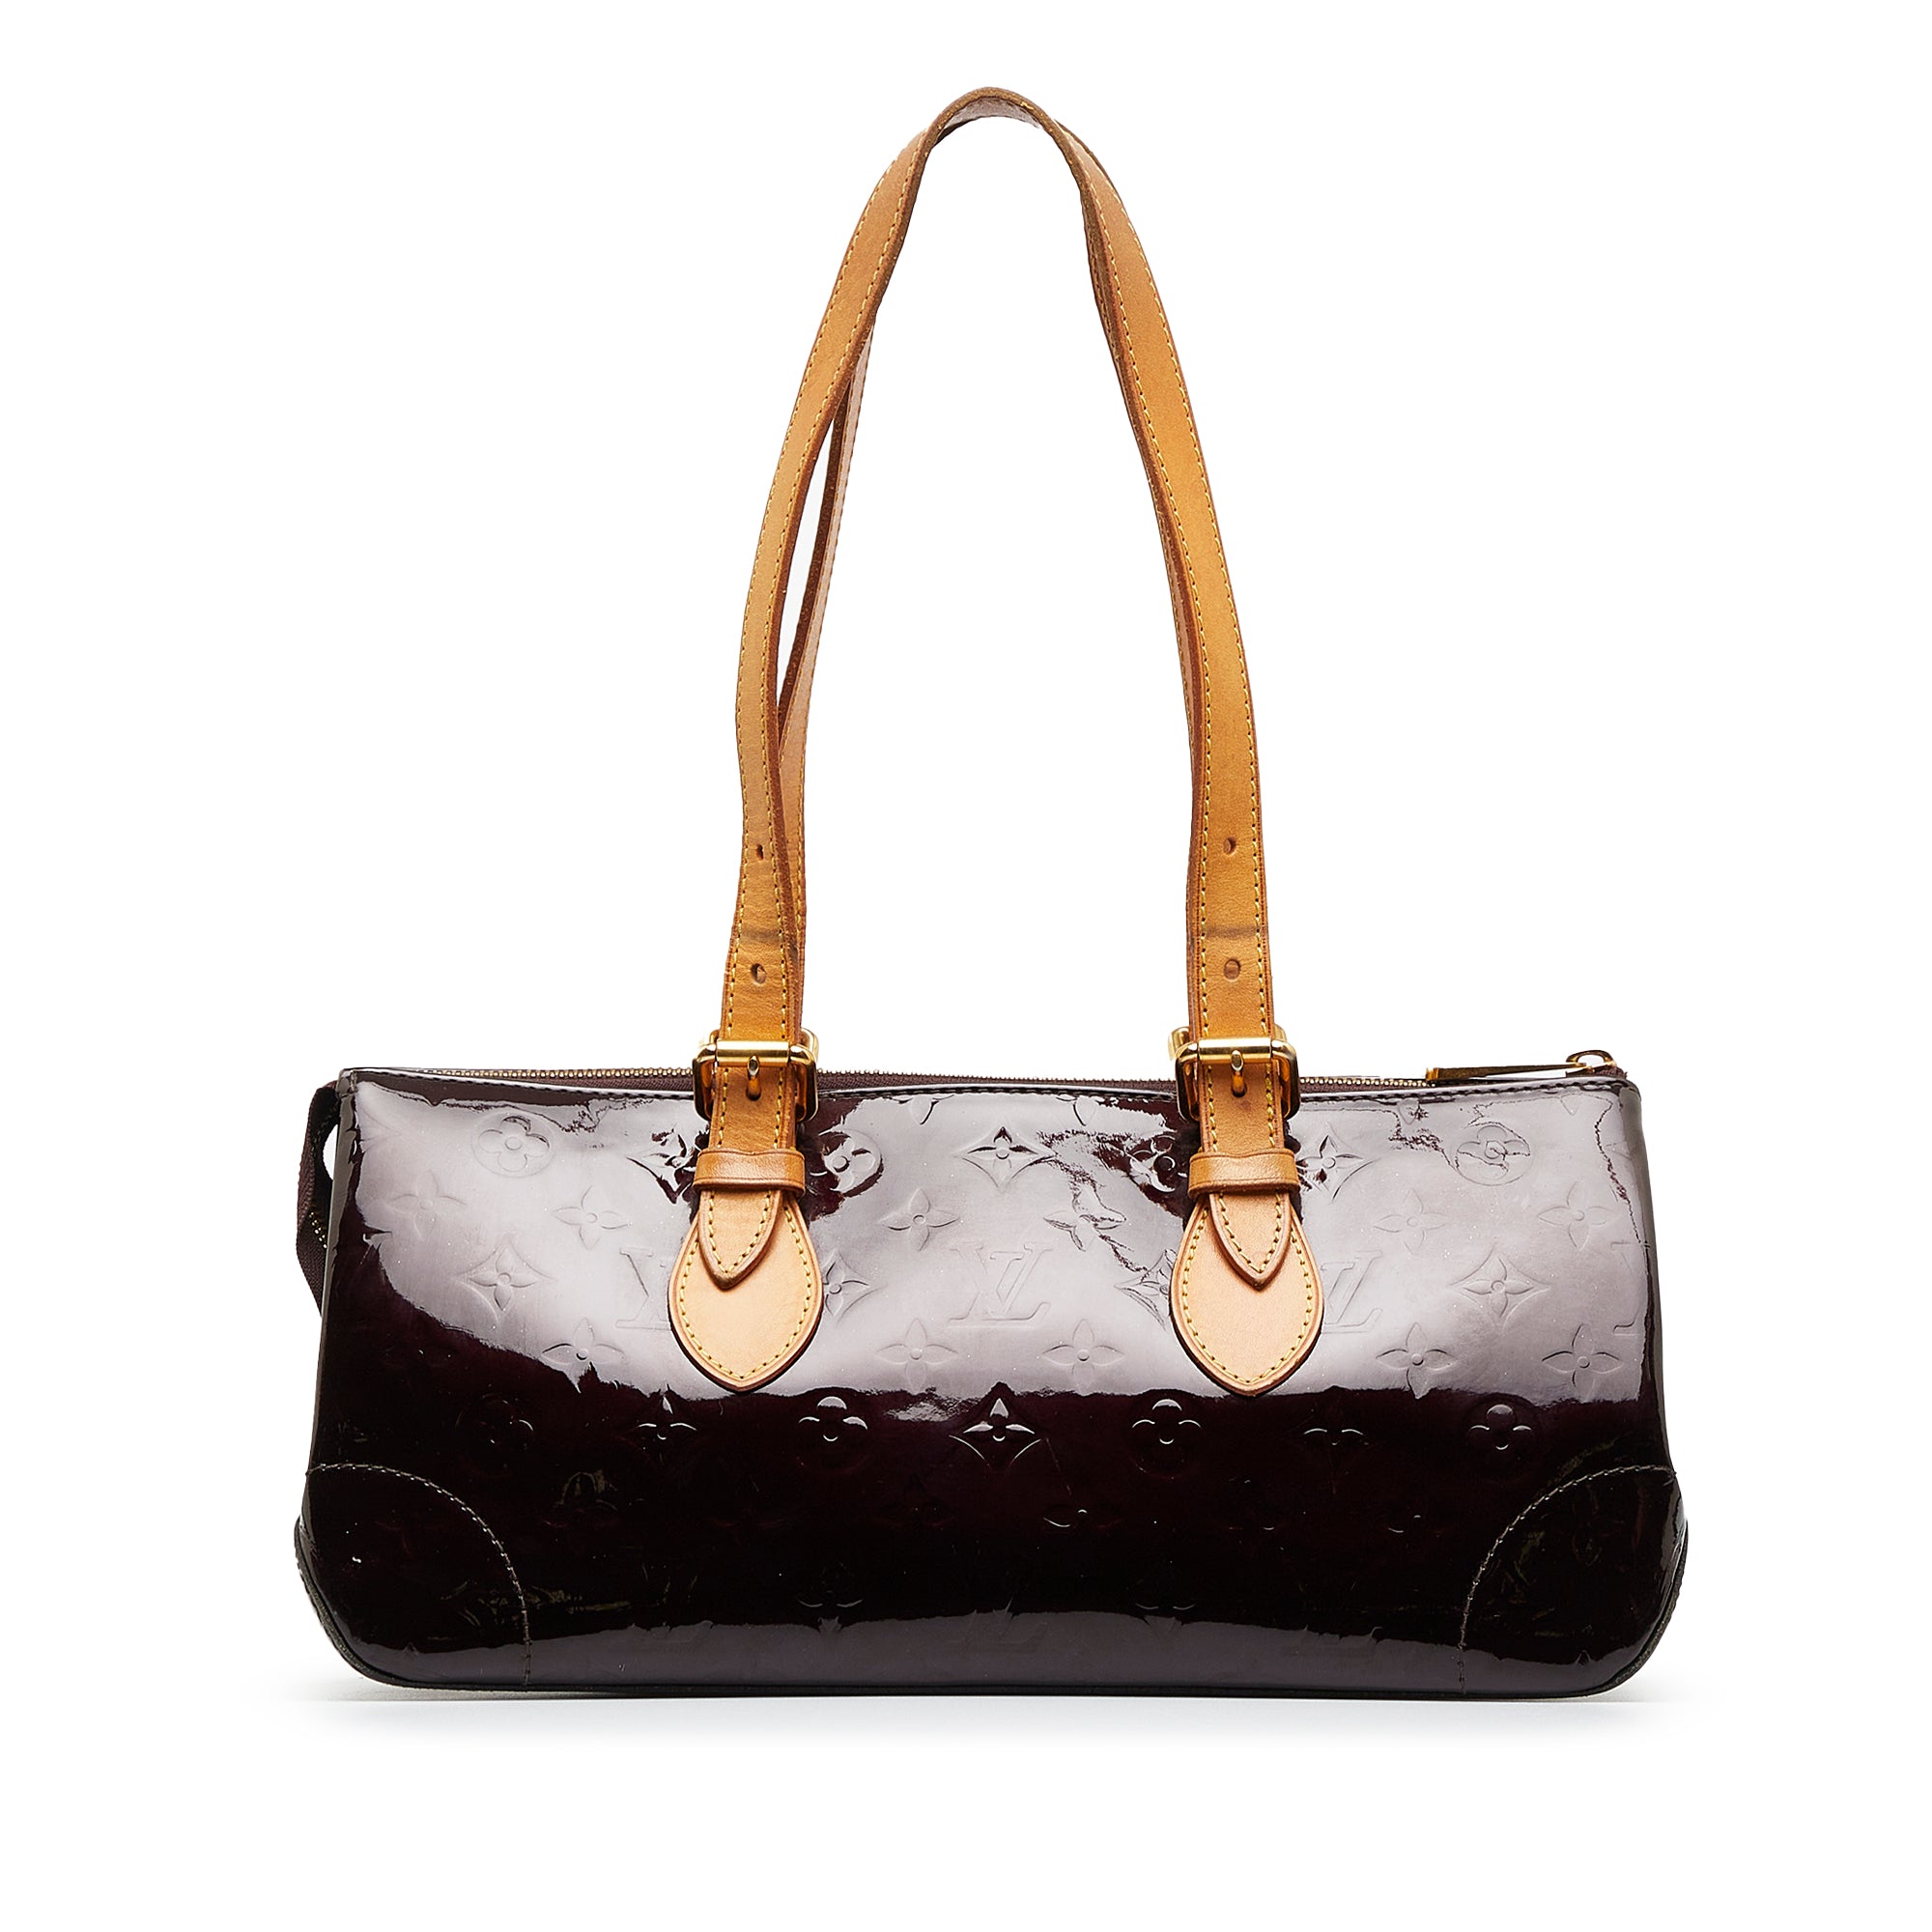 Louis Vuitton Vernis Rosewood Bag